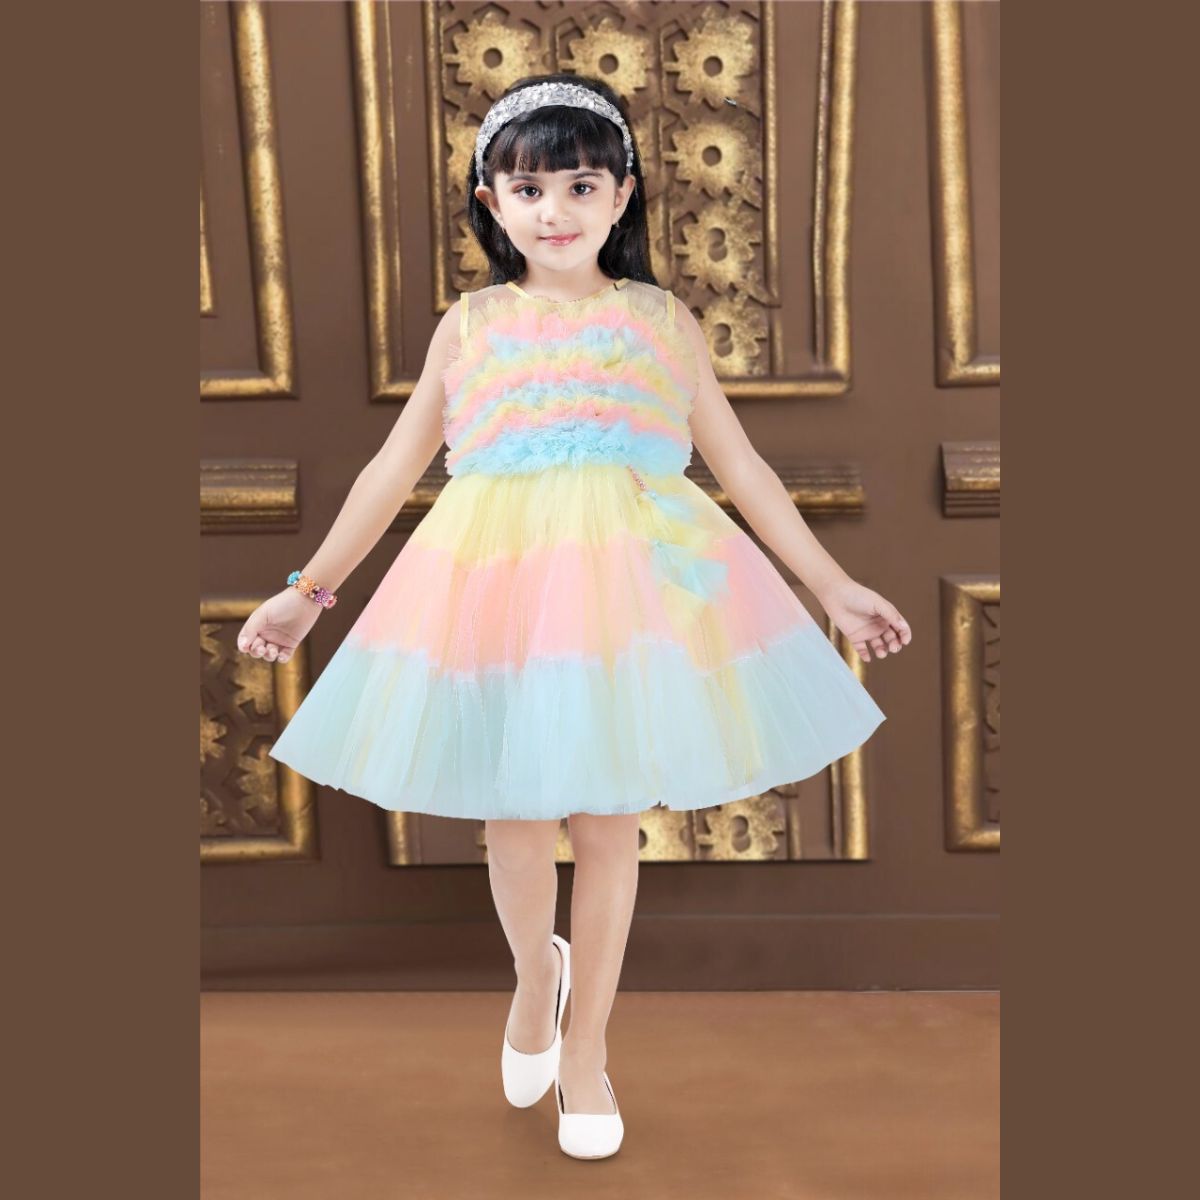 Baby Girls Party Wear Frock Birthday Dress For Girls bxa165ppl  Wish Karo